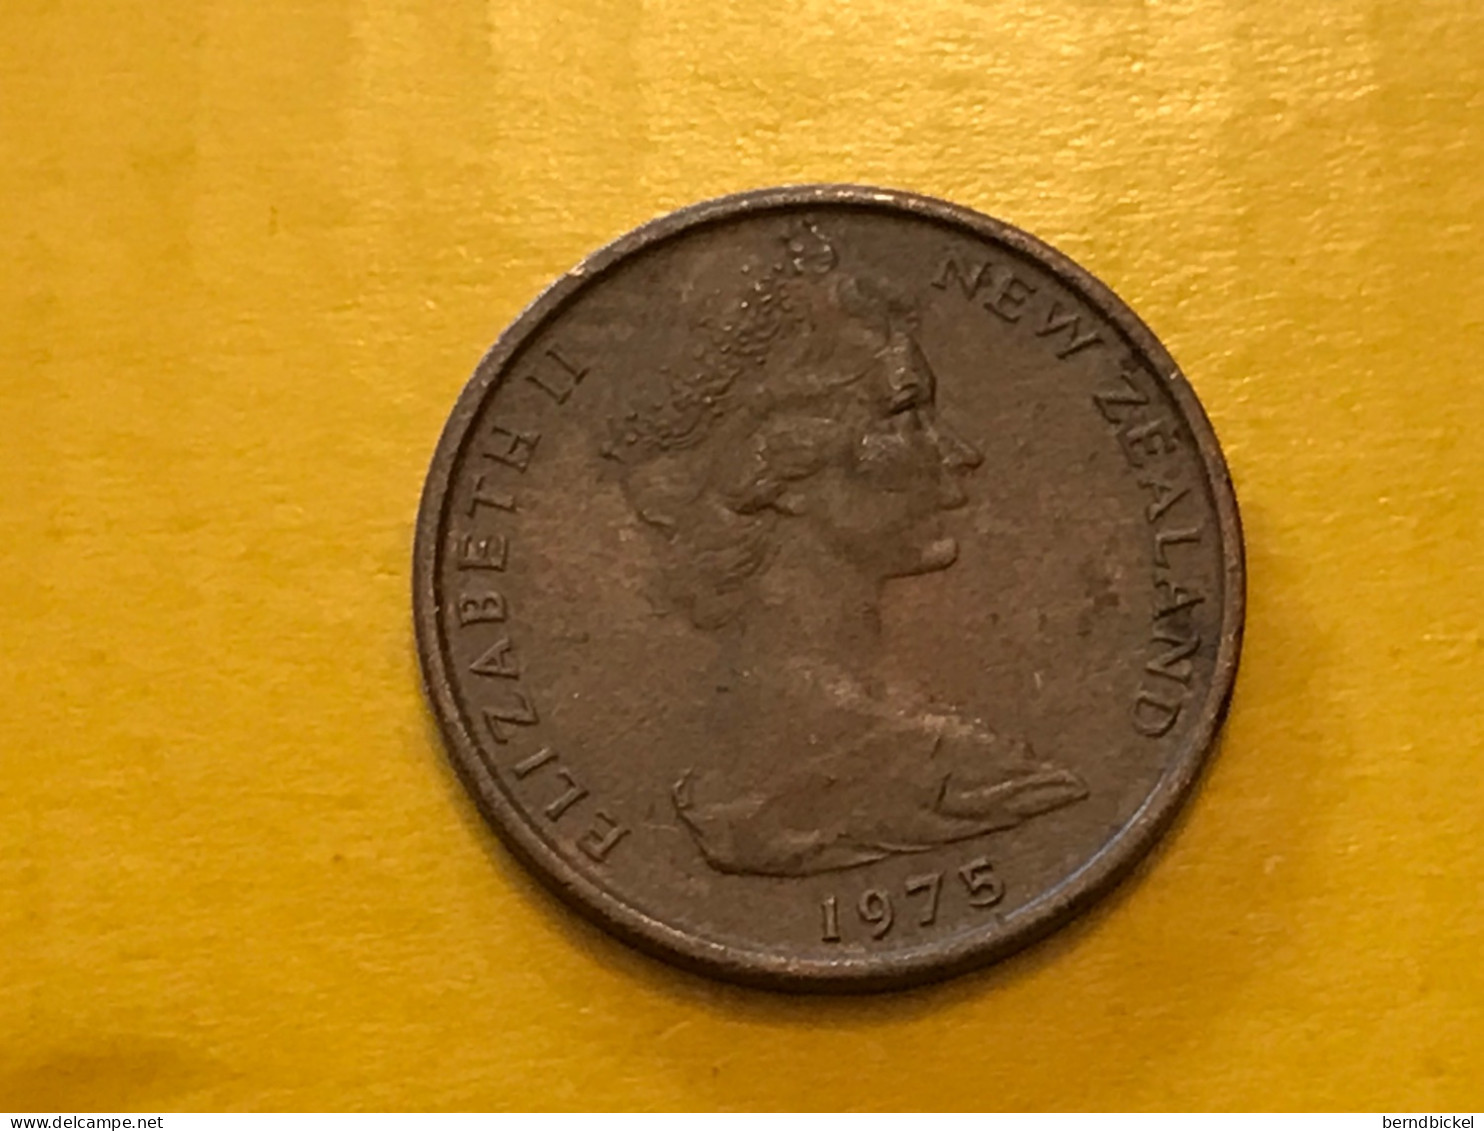 Münze Münzen Umlaufmünze Neuseeland 1 Cent 1975 - Neuseeland